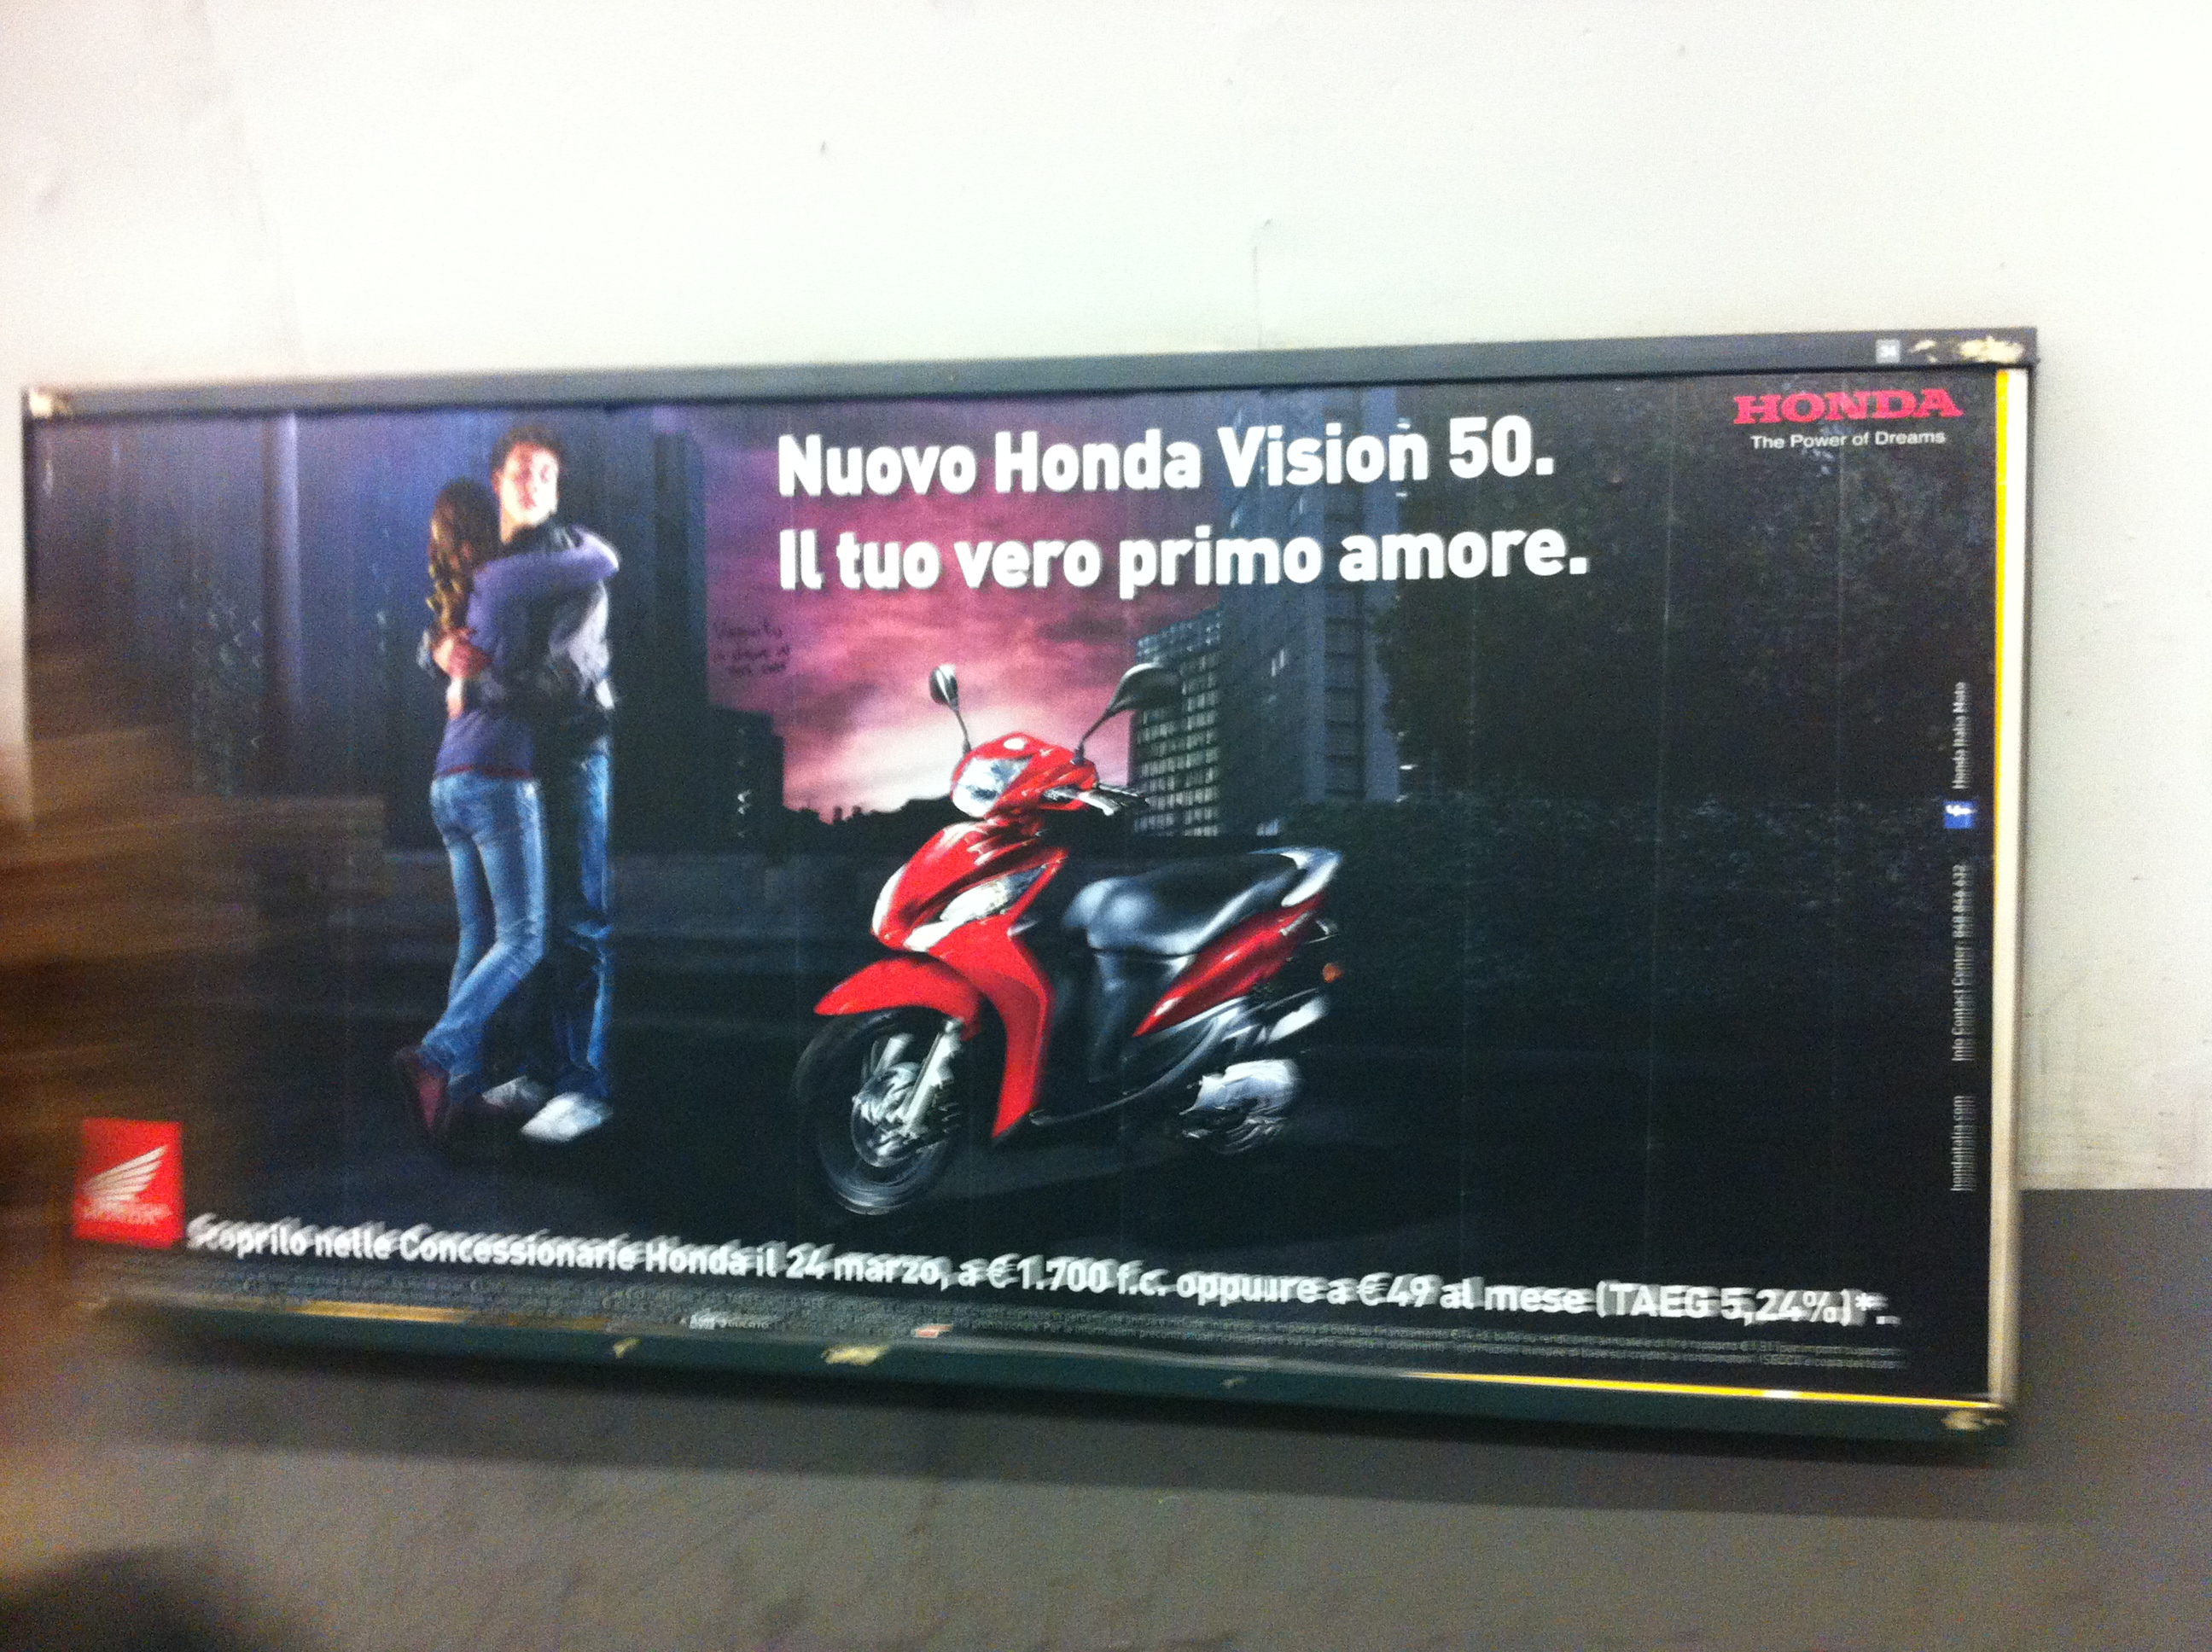 Honda advertising agency #5